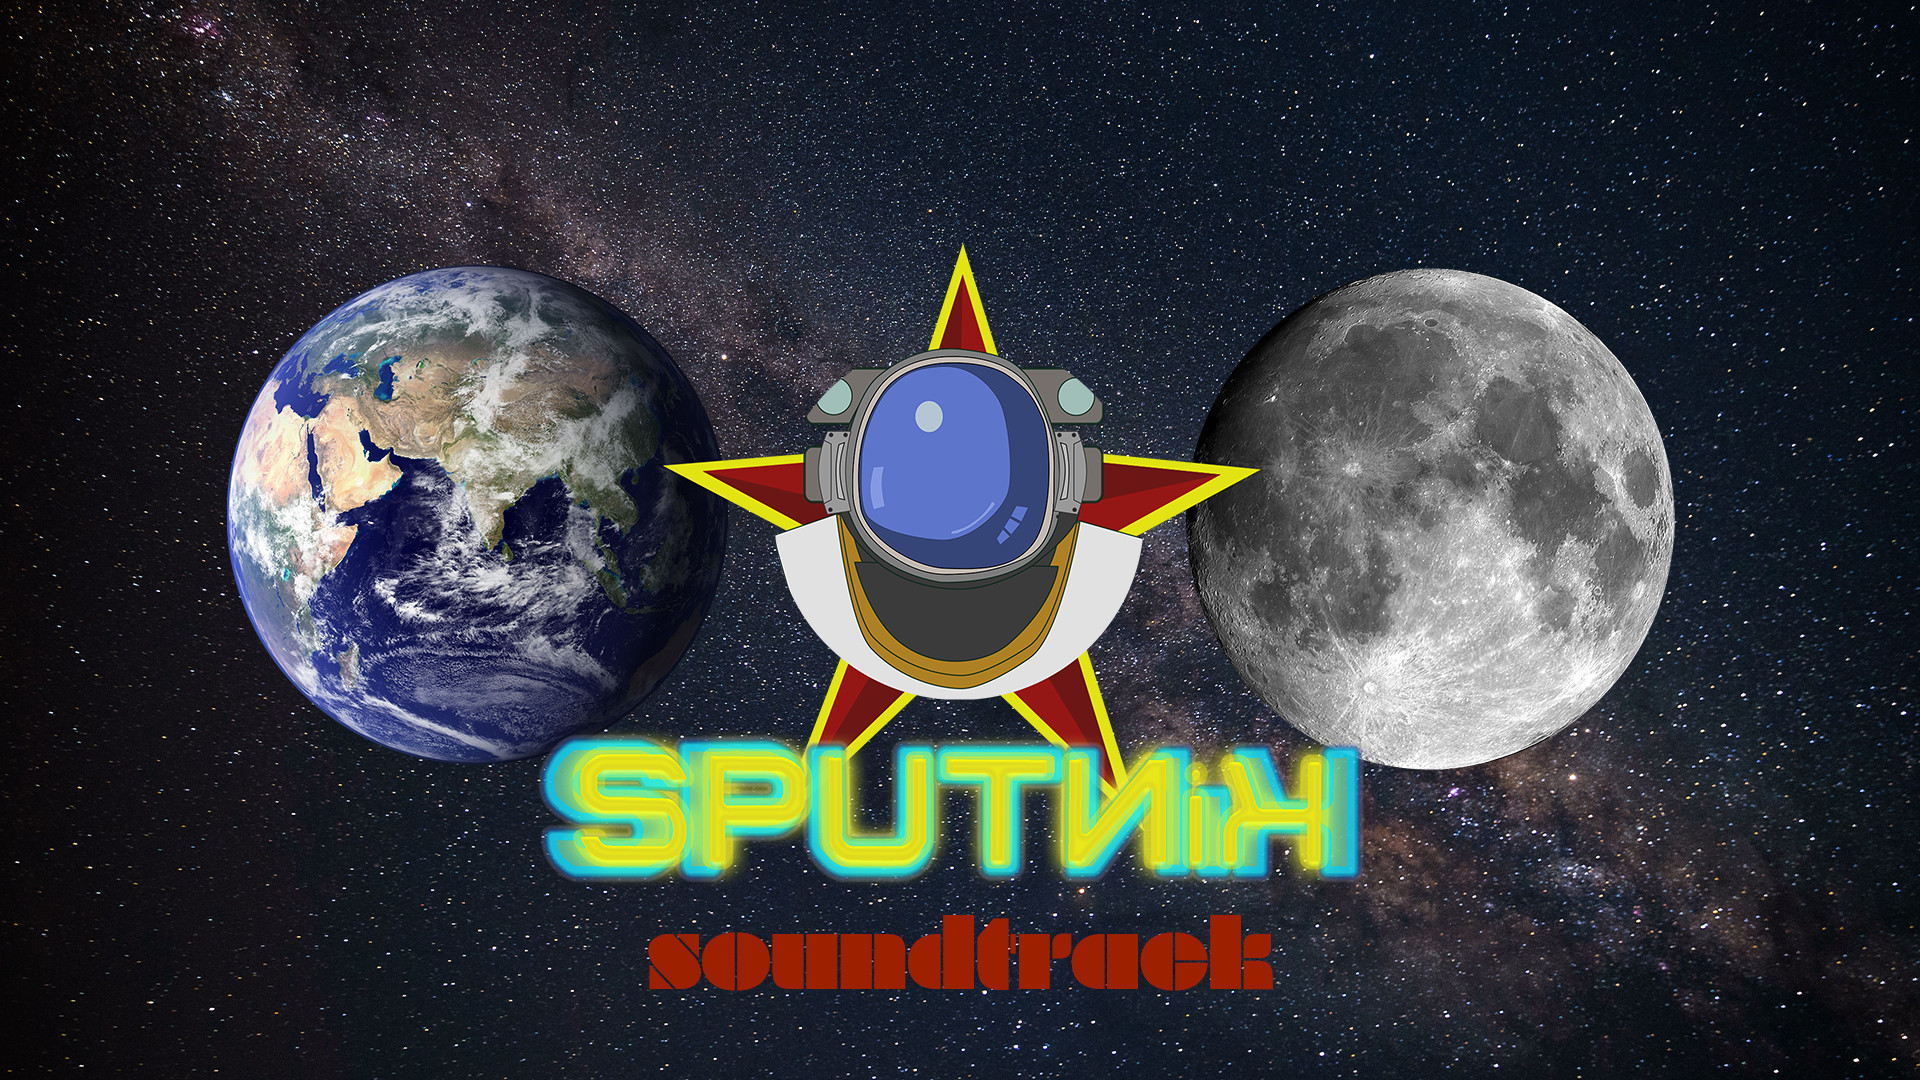 Sputnik Soundtrack Featured Screenshot #1